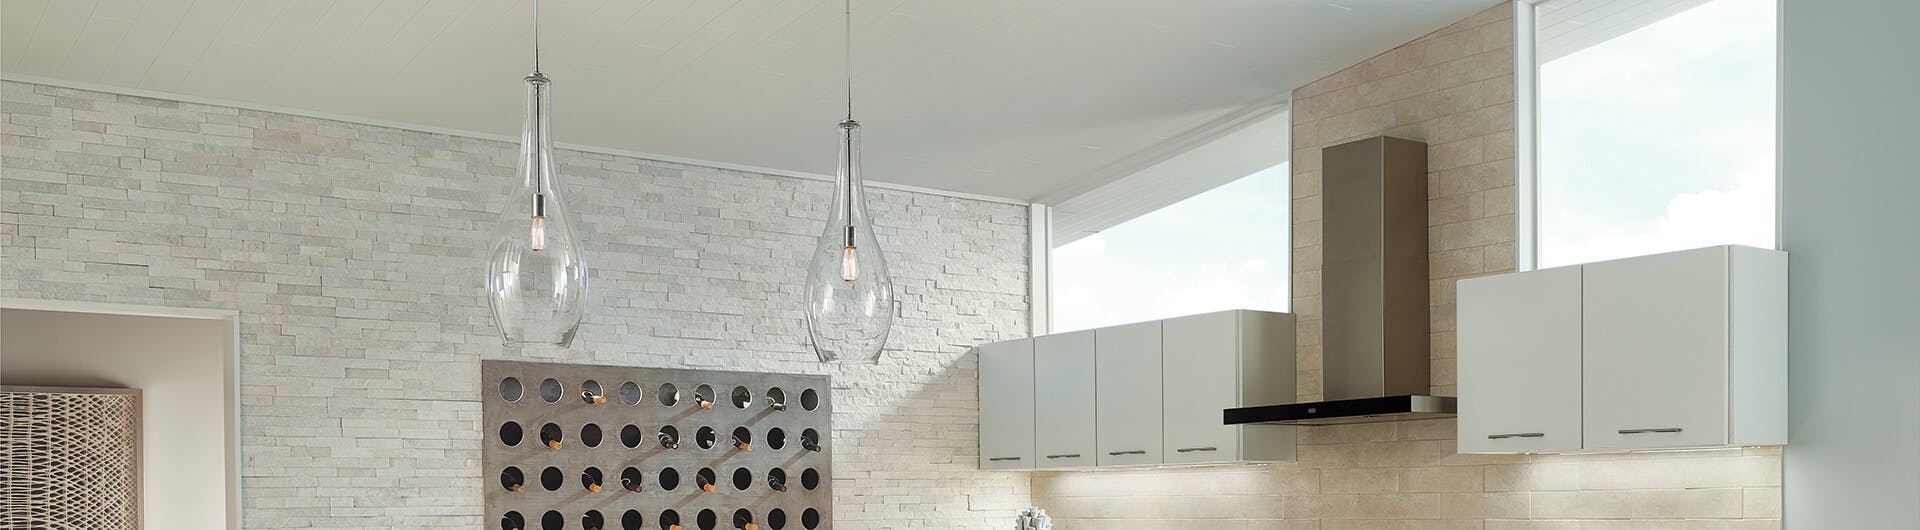 Brightly lit kitchen featuring under cabinet tape lighting 